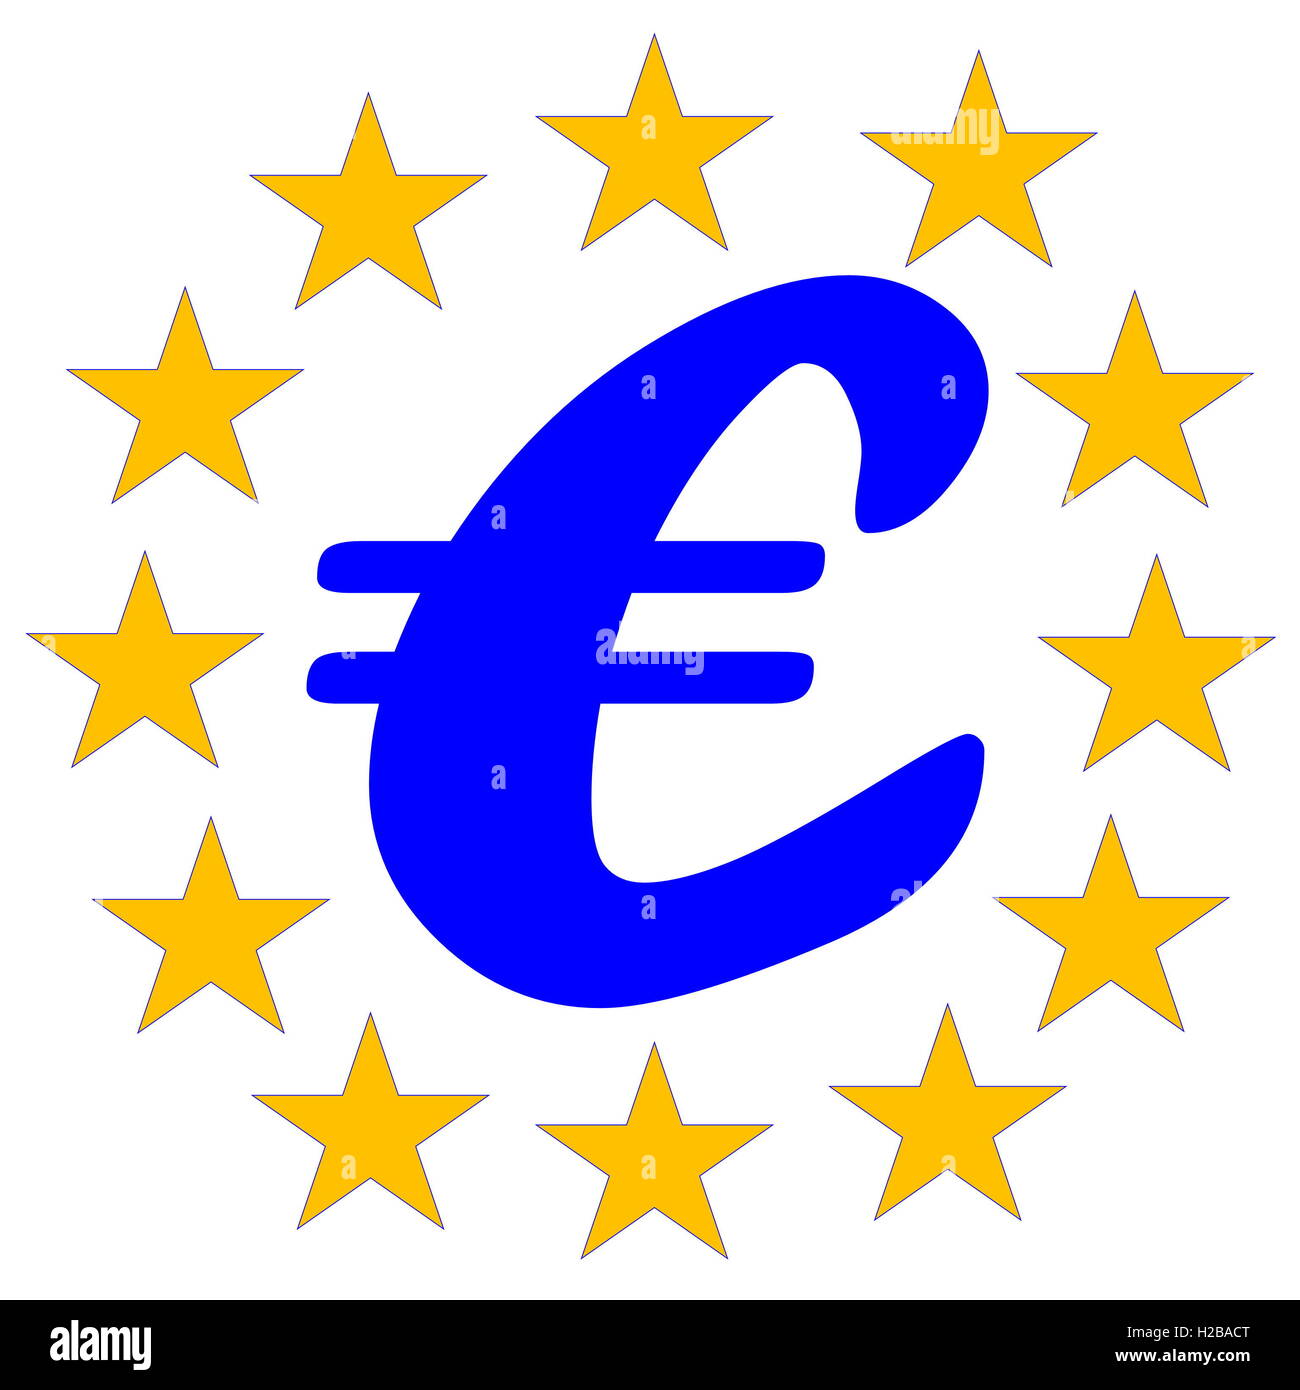 European community symbol Stock Photo